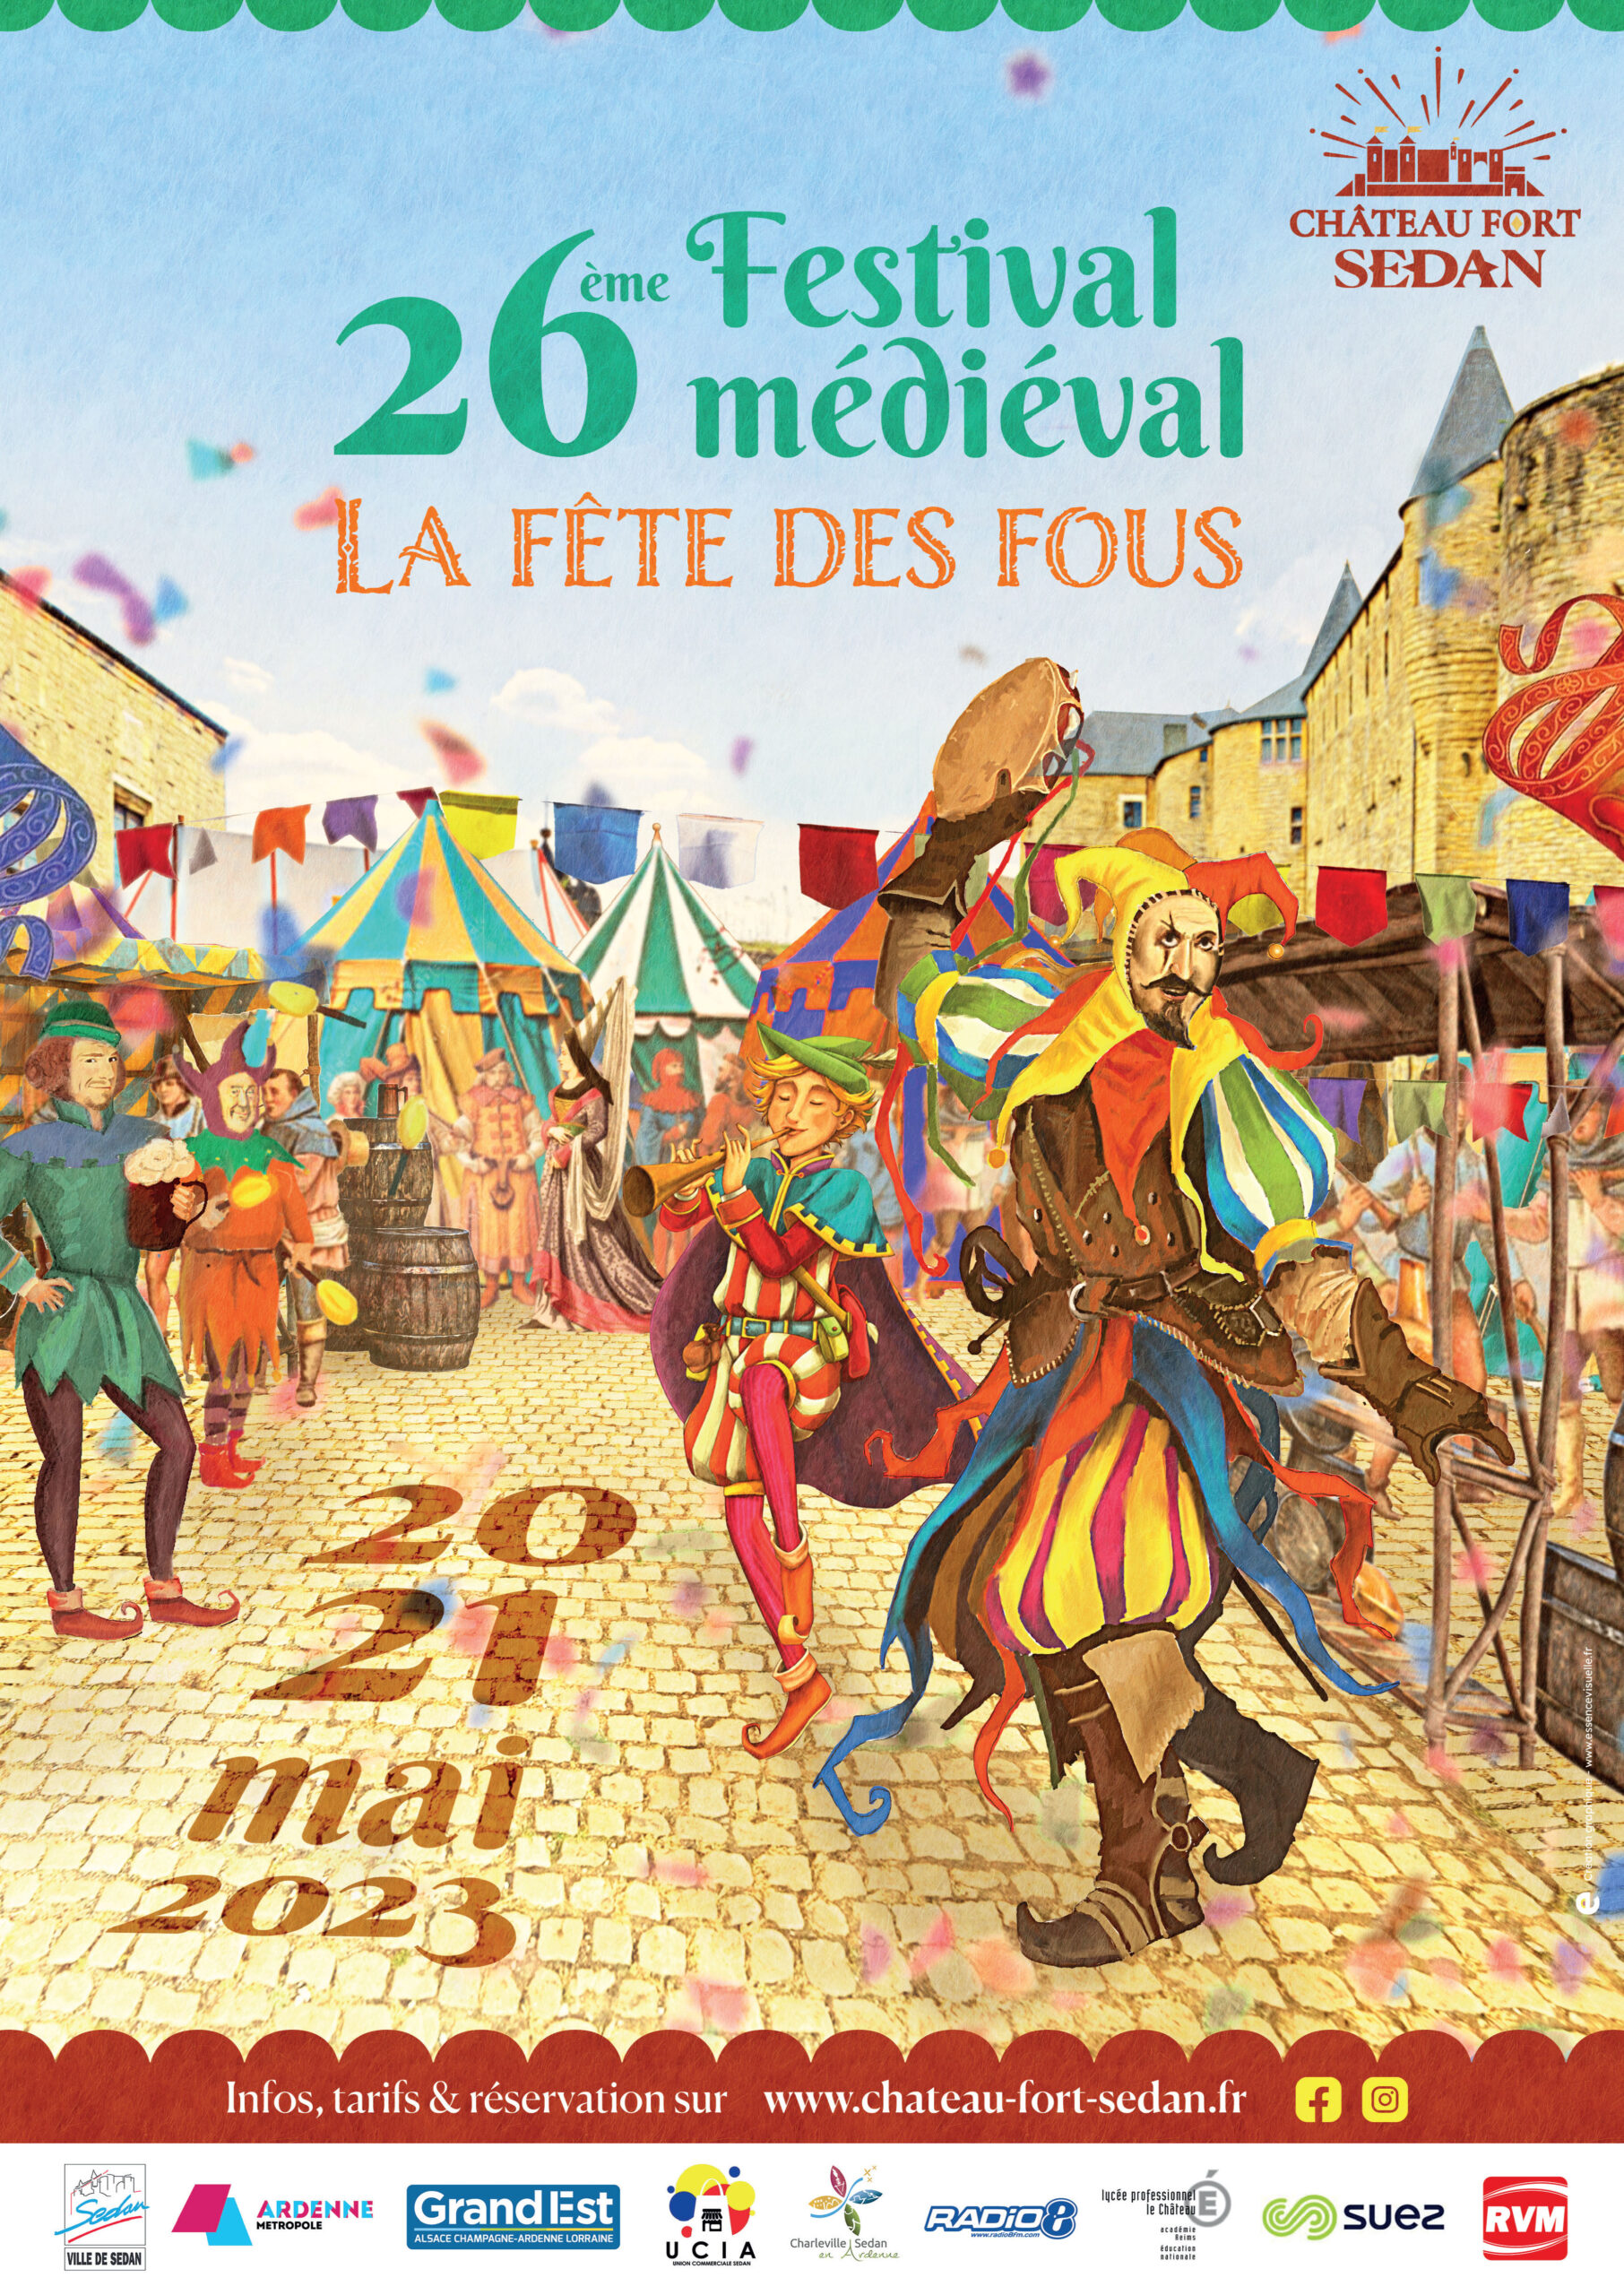 26th Medieval Festival - Chateau fort de Sedan